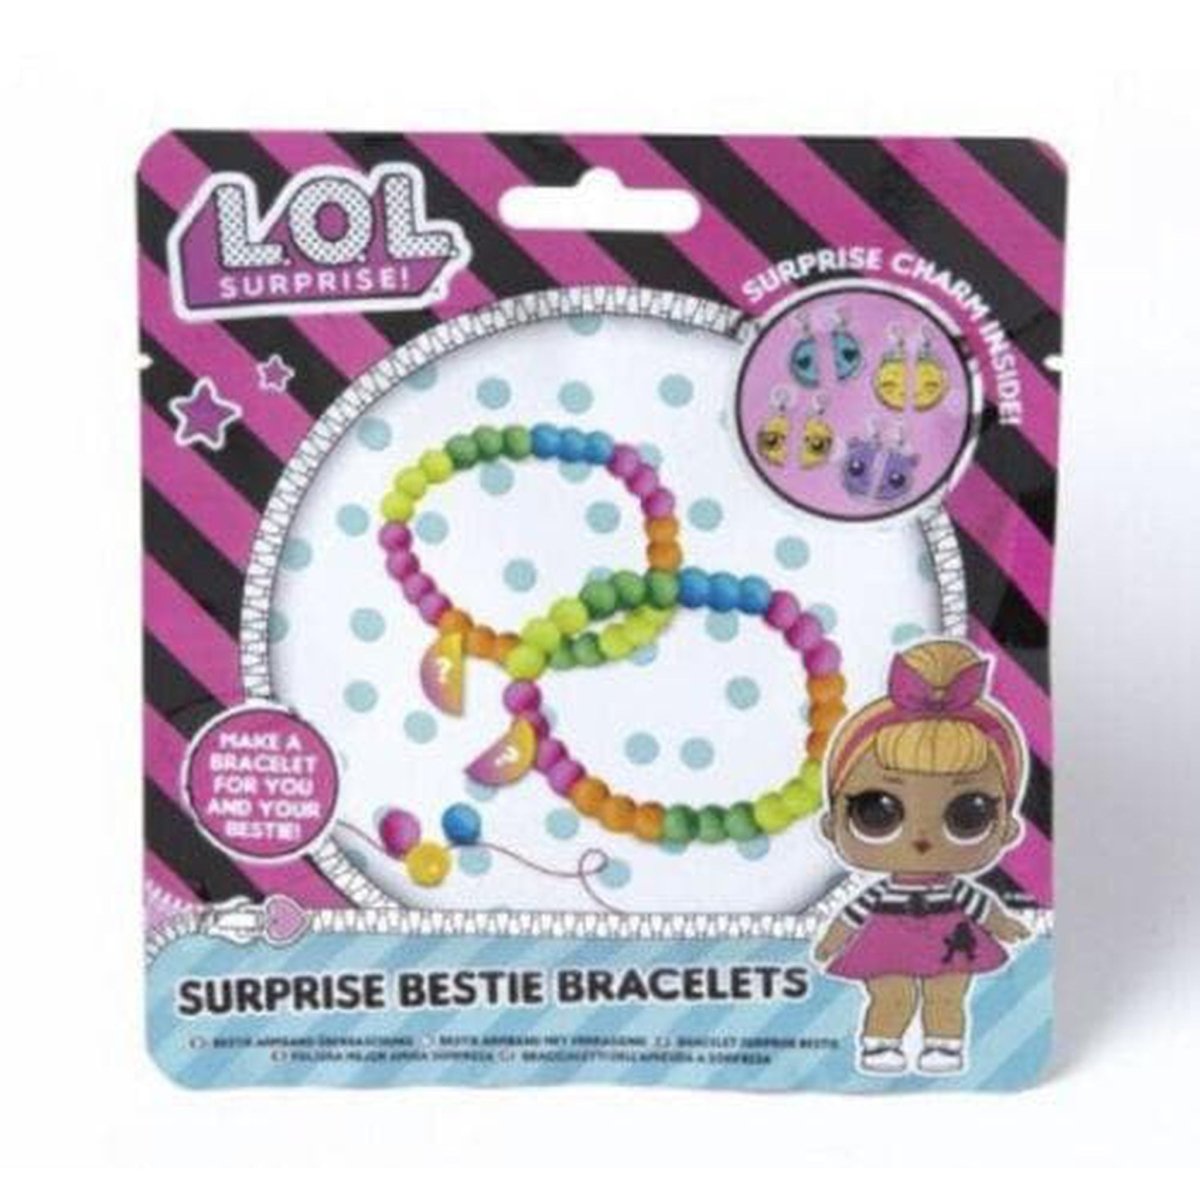 LOL Surprise Bestie Bracelets - Kids Party Craft